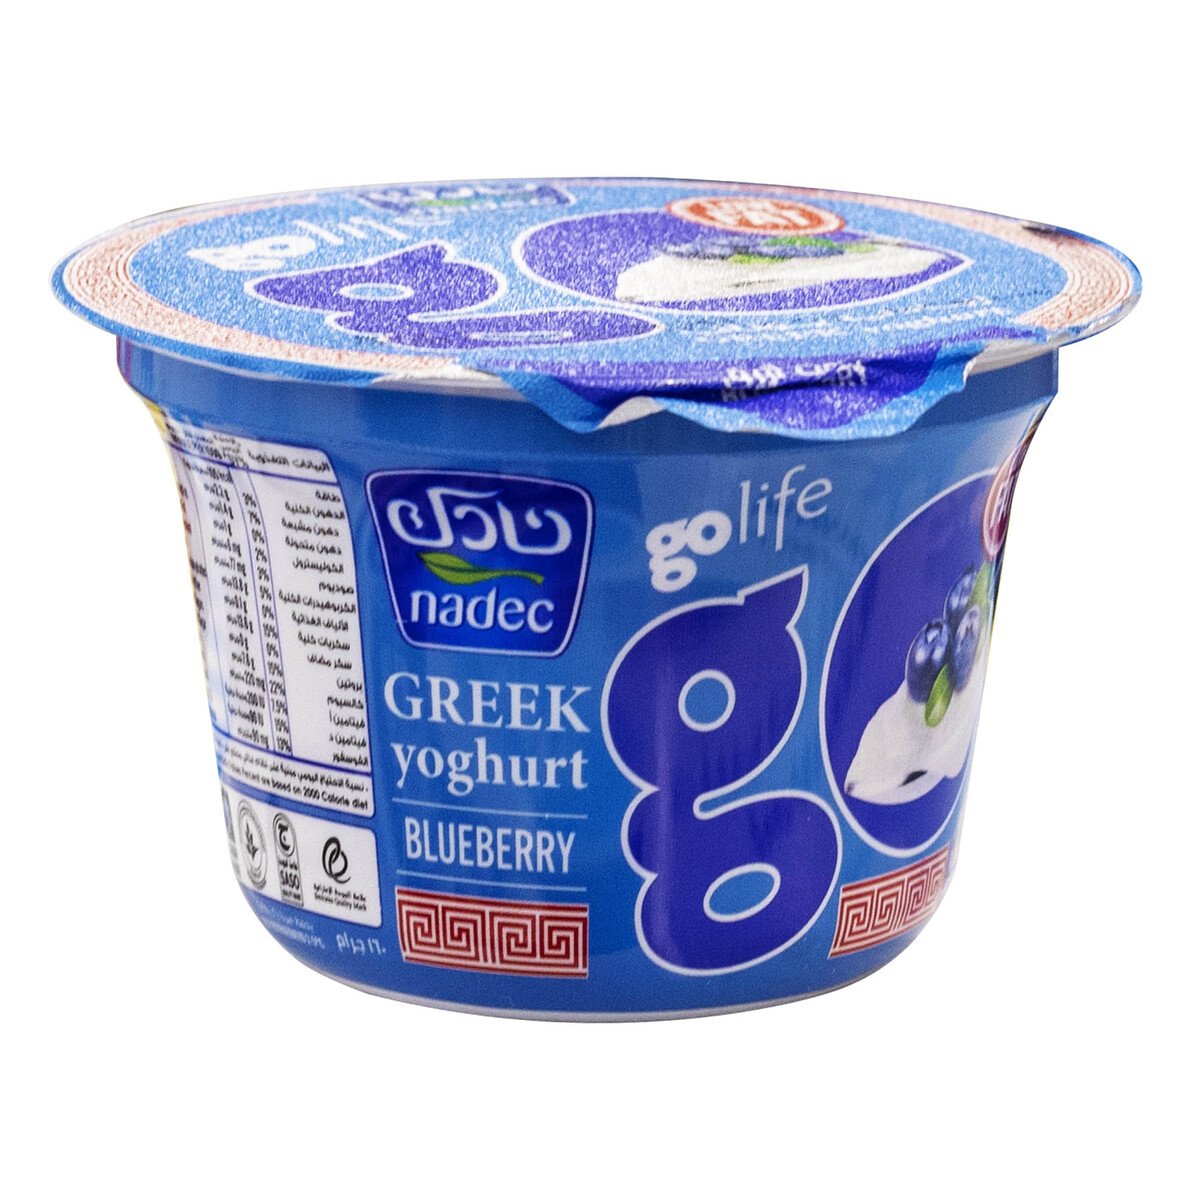 Nadec Low Fat Go Life Blueberry Greek Yoghurt 160 g